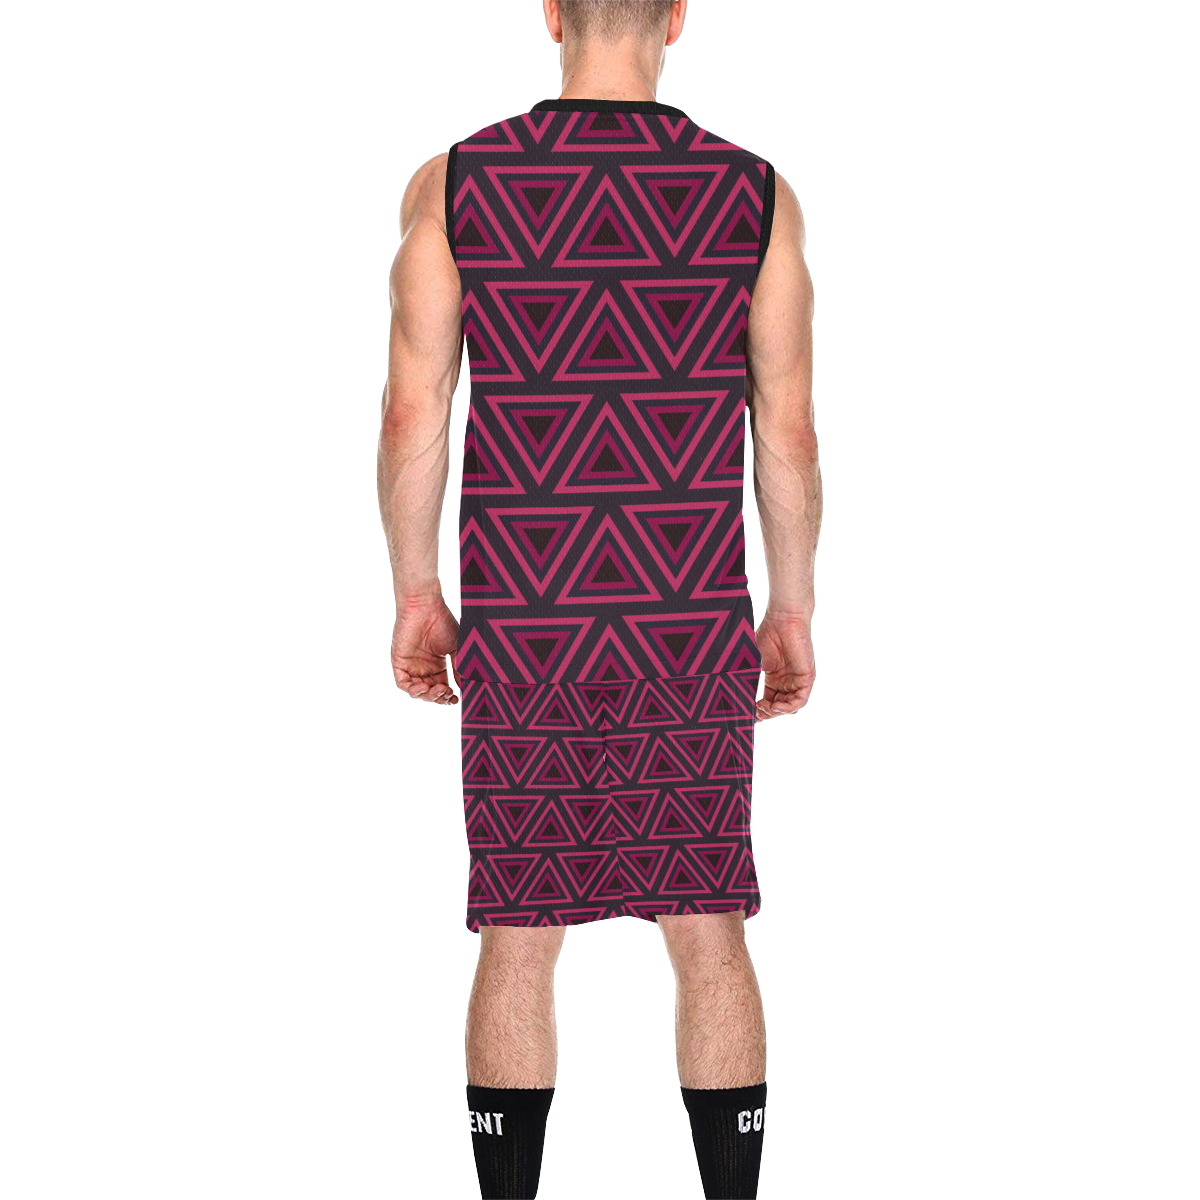 Tribal Ethnic Triangles All Over Print Basketball Uniform